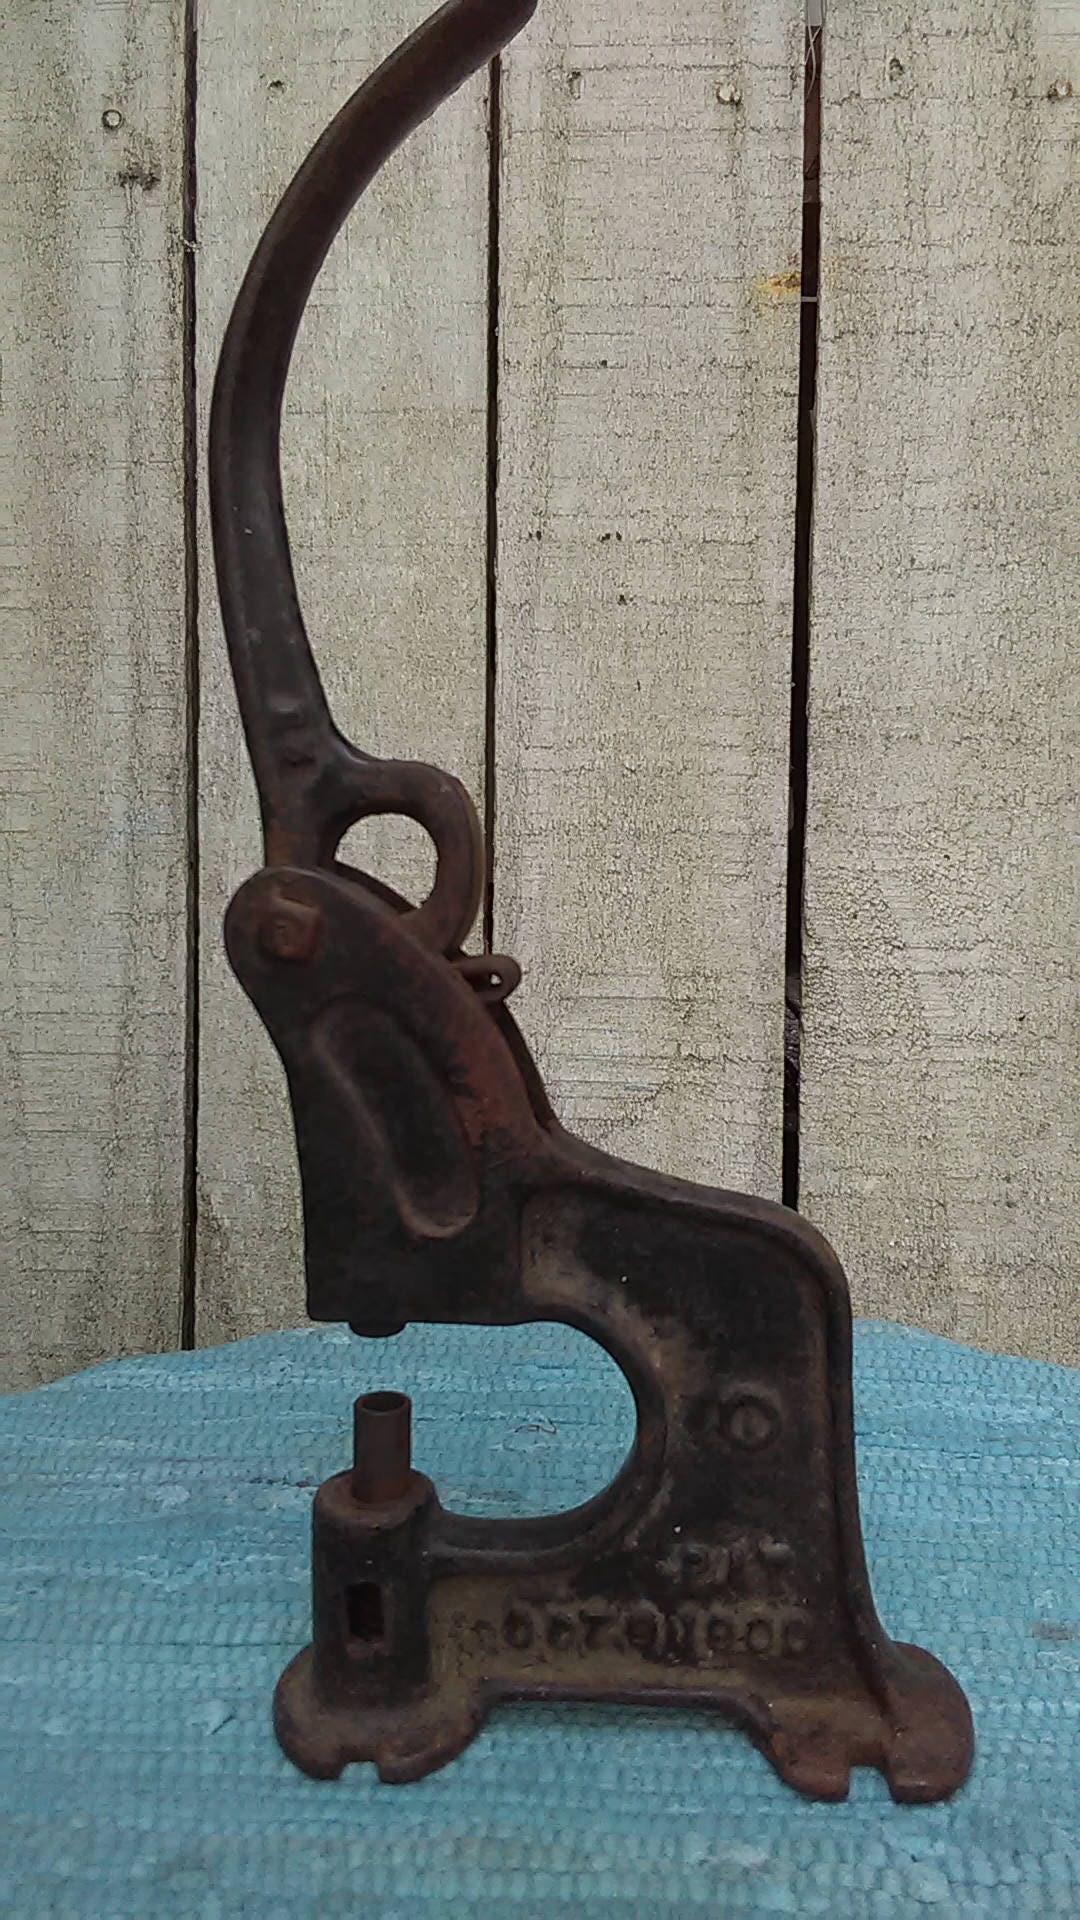 Arcade Hand Rivet Press Vintage Leather or Metal Craft Tool